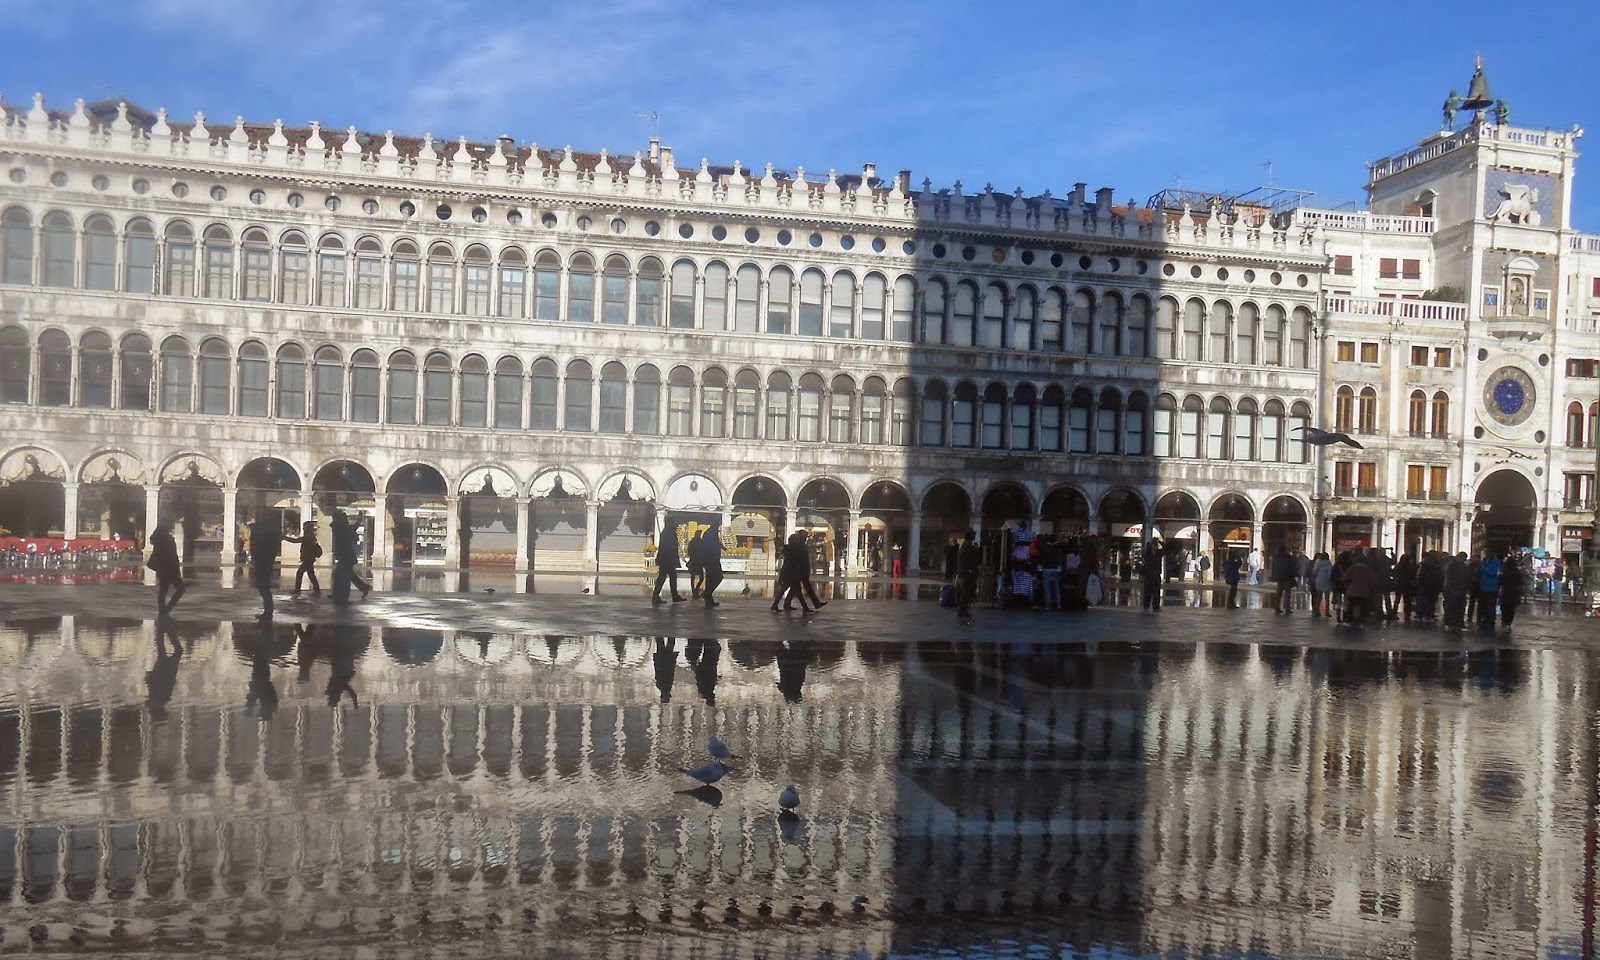 Acqua alta and acqua granda - the four truths about high tides in Venice